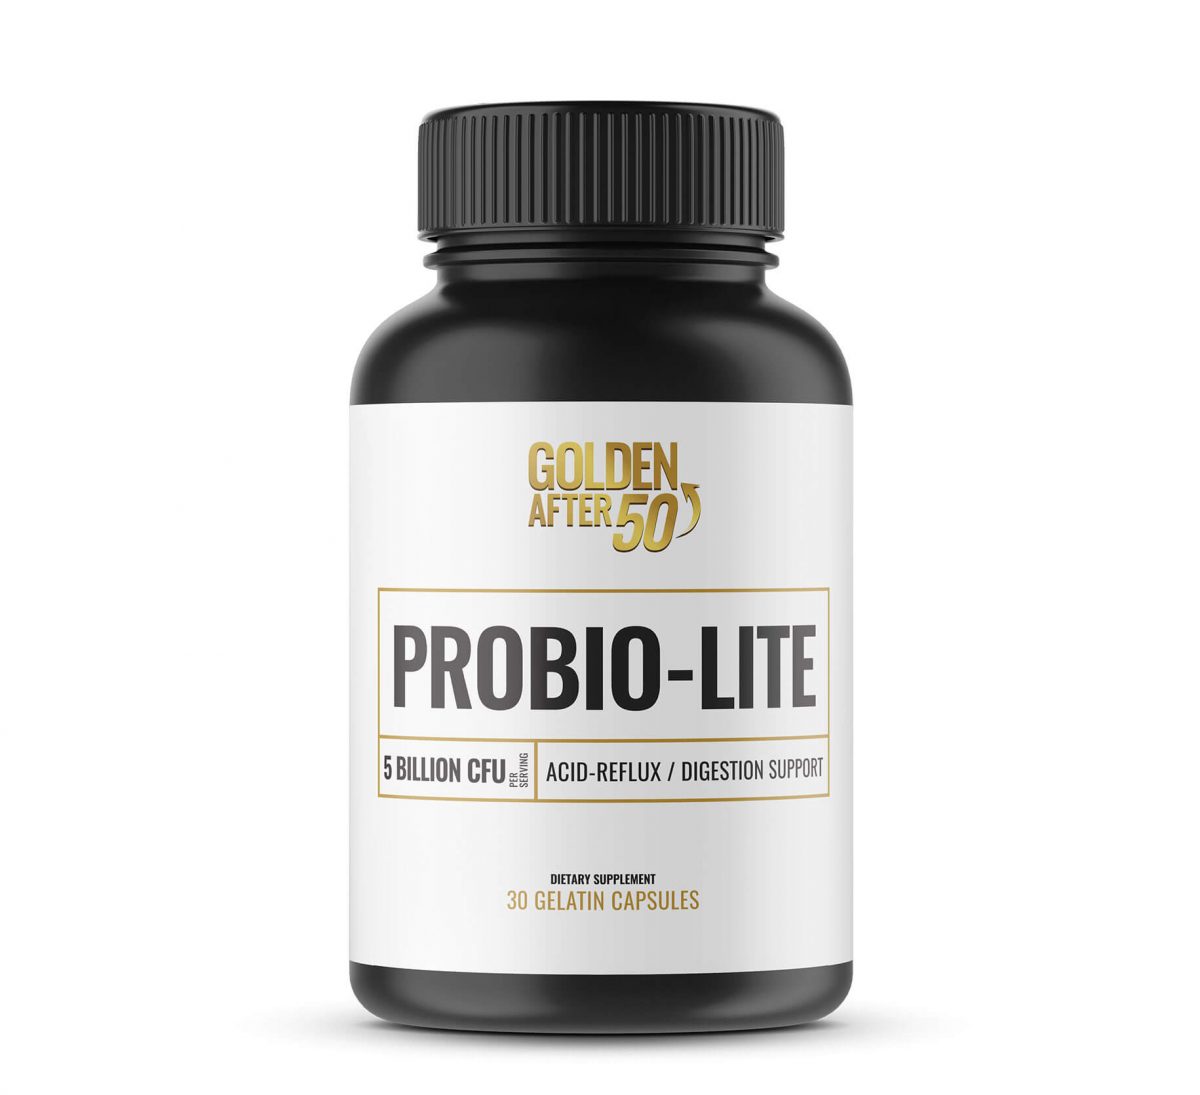 ProbioLite Reviews